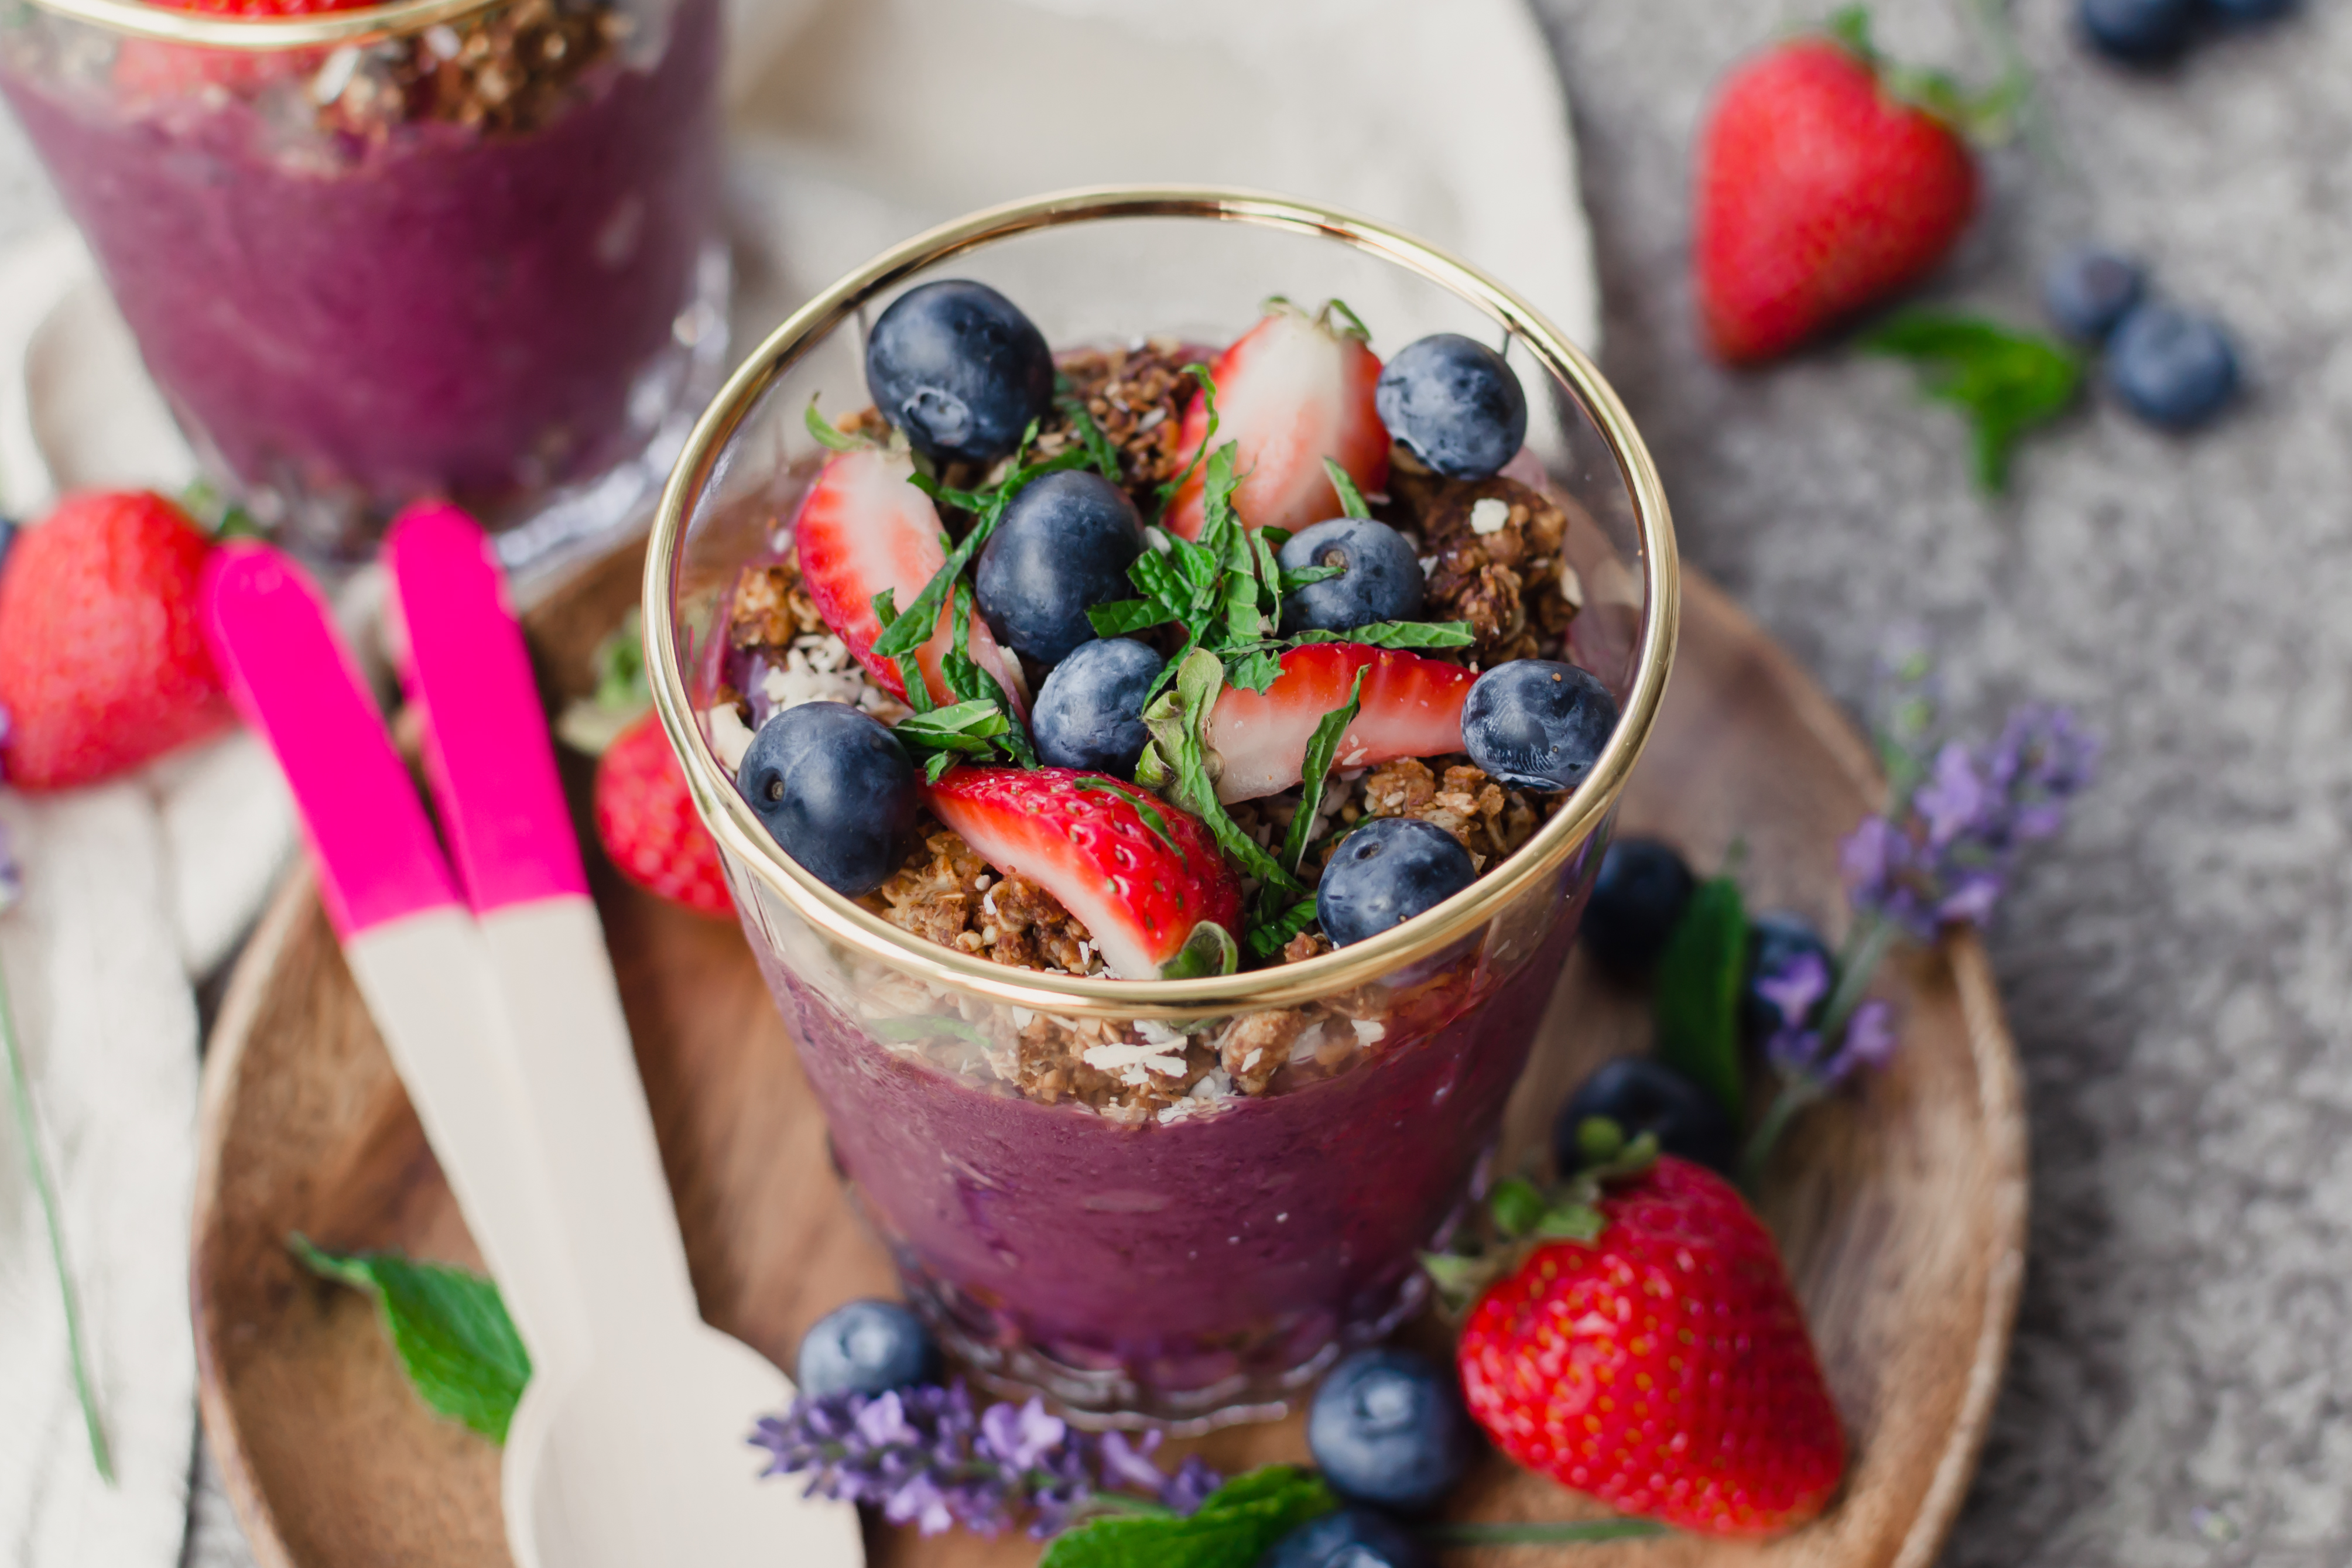 vegan acai parfaits with berries and mint